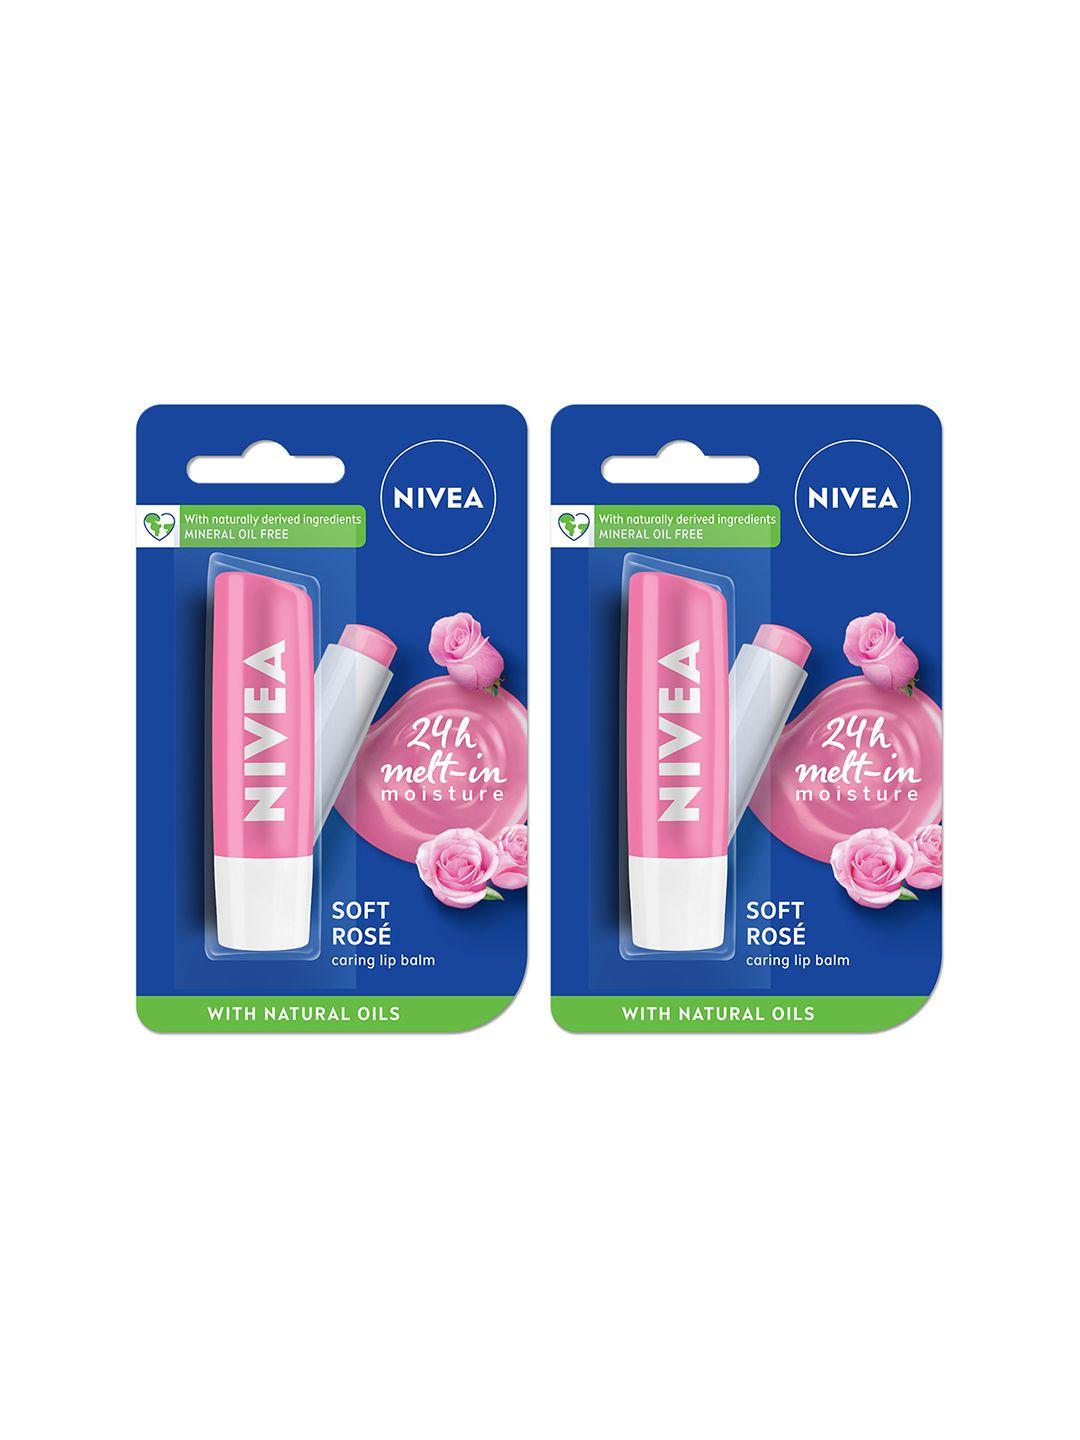 nivea set of 2 soft rose caring lip balm - 4.8g each